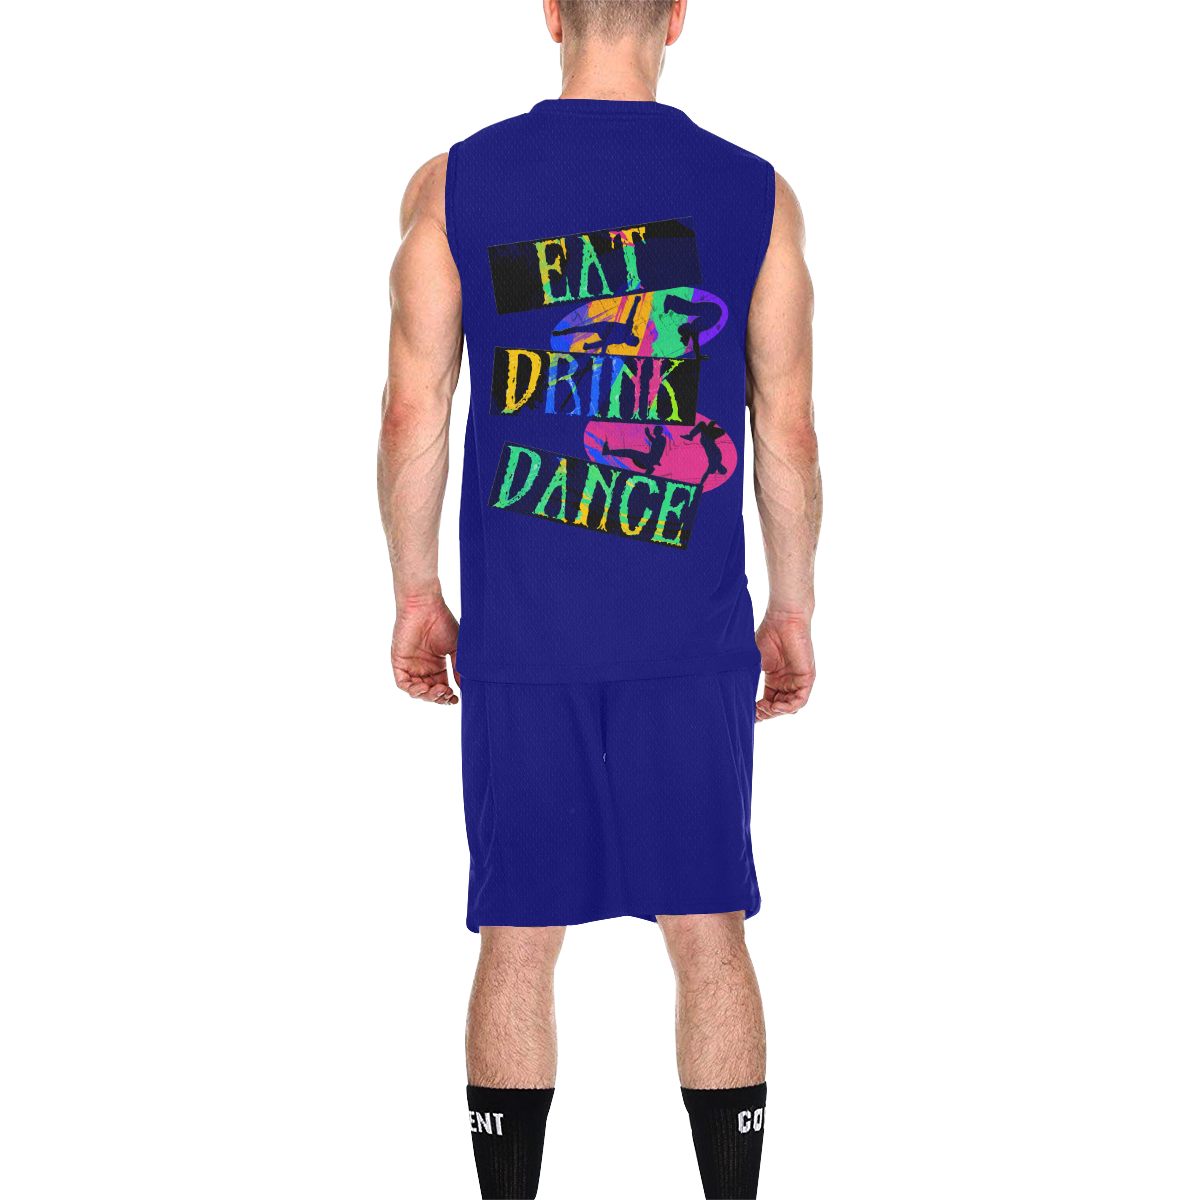 Break Dancing Colorful / Dark Blue All Over Print Basketball Uniform